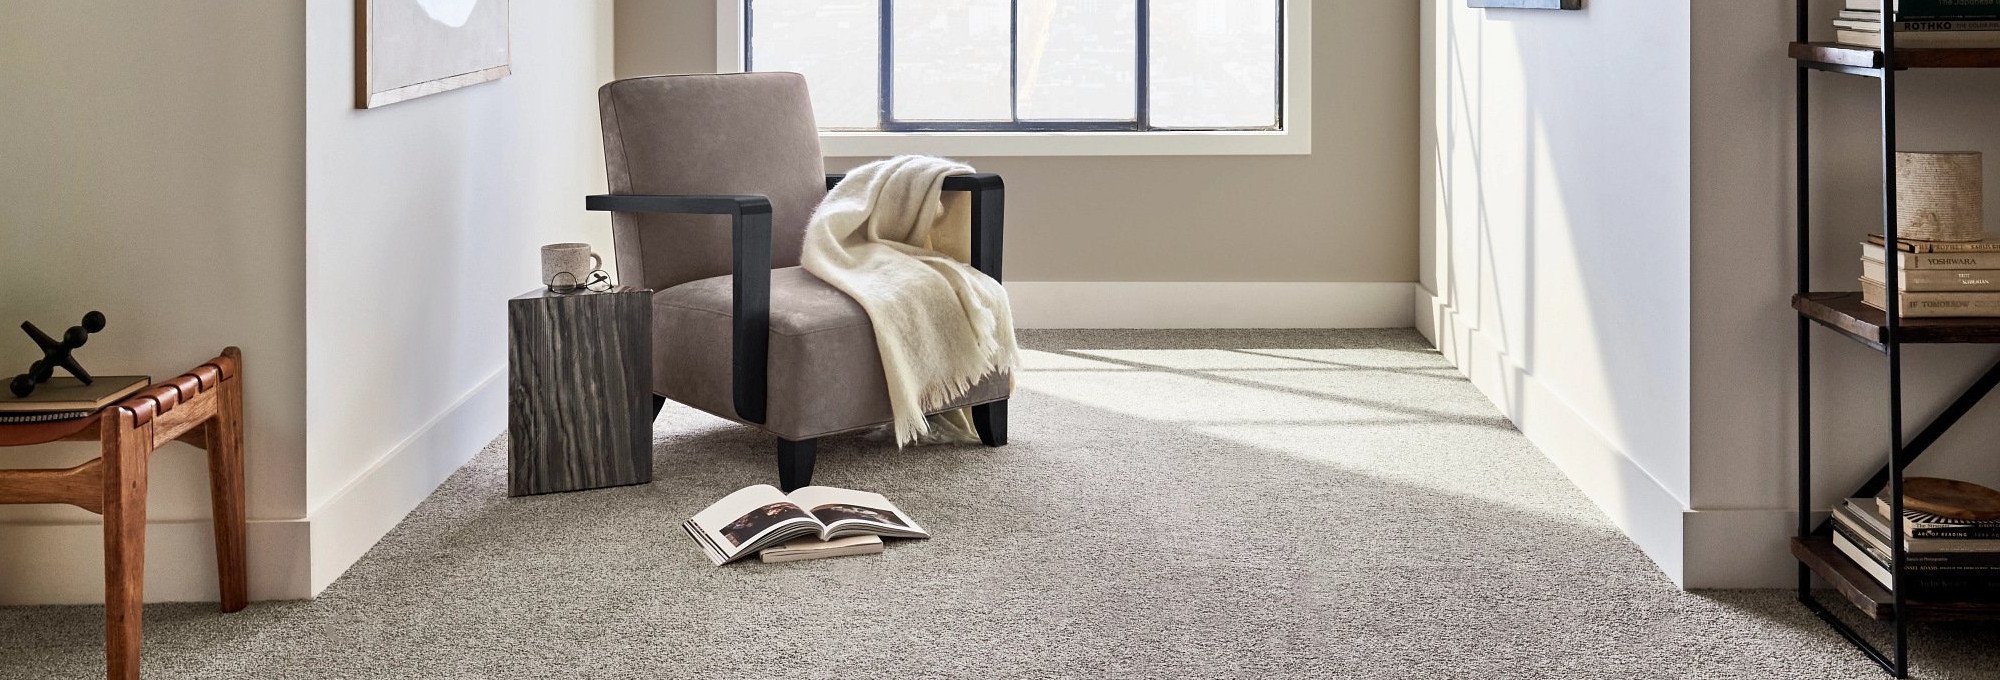 Armchair on carpet floor - Cut-Rite Carpets & Design Center in NY